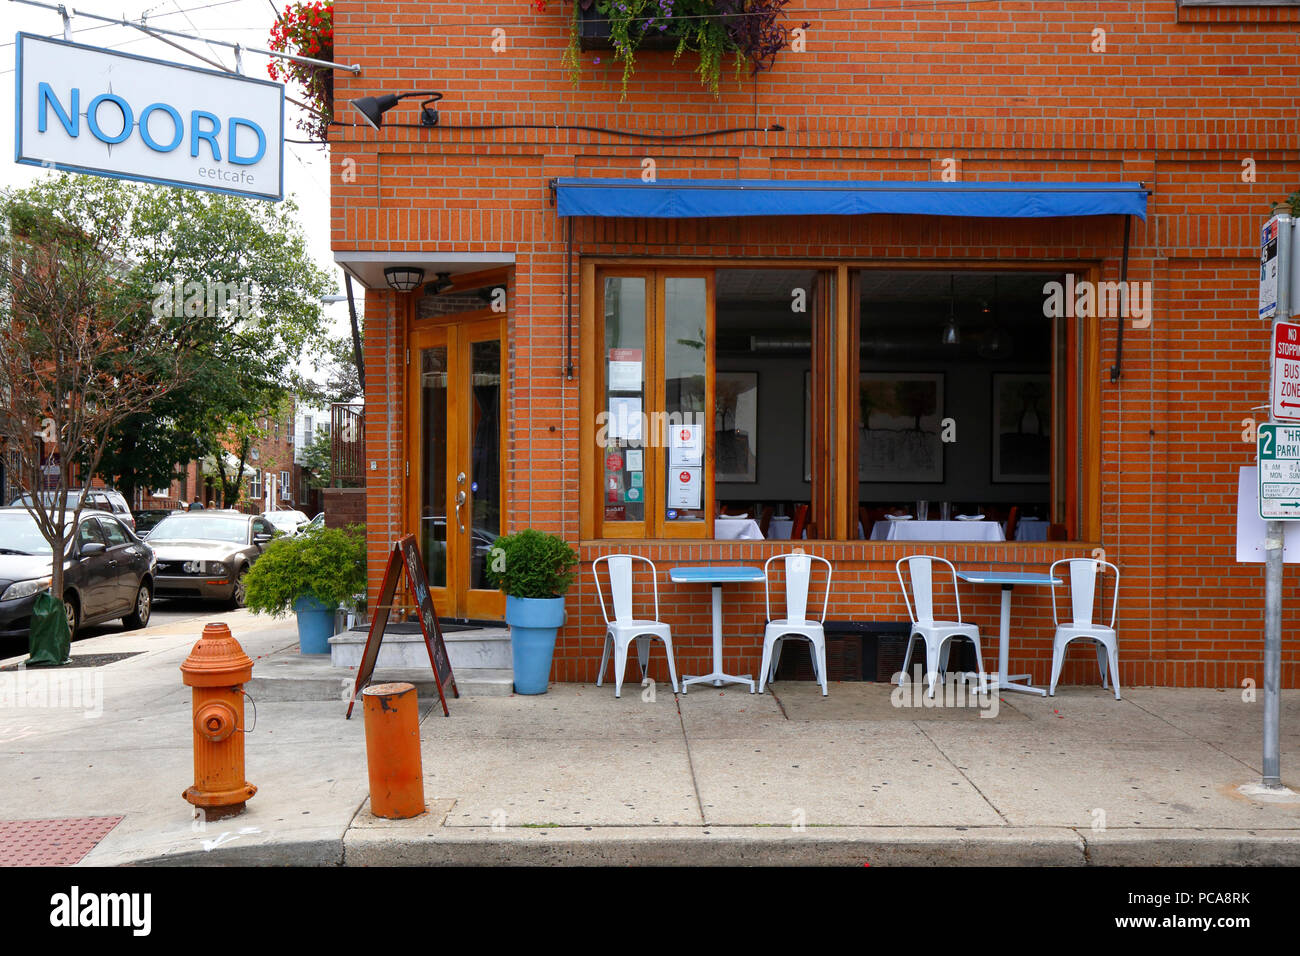 Noord, 1046 Tasker St, Philadelphia, PA. exterior storefront of a dutch restaurant, and sidewalk cafe in passyunk square. Stock Photo